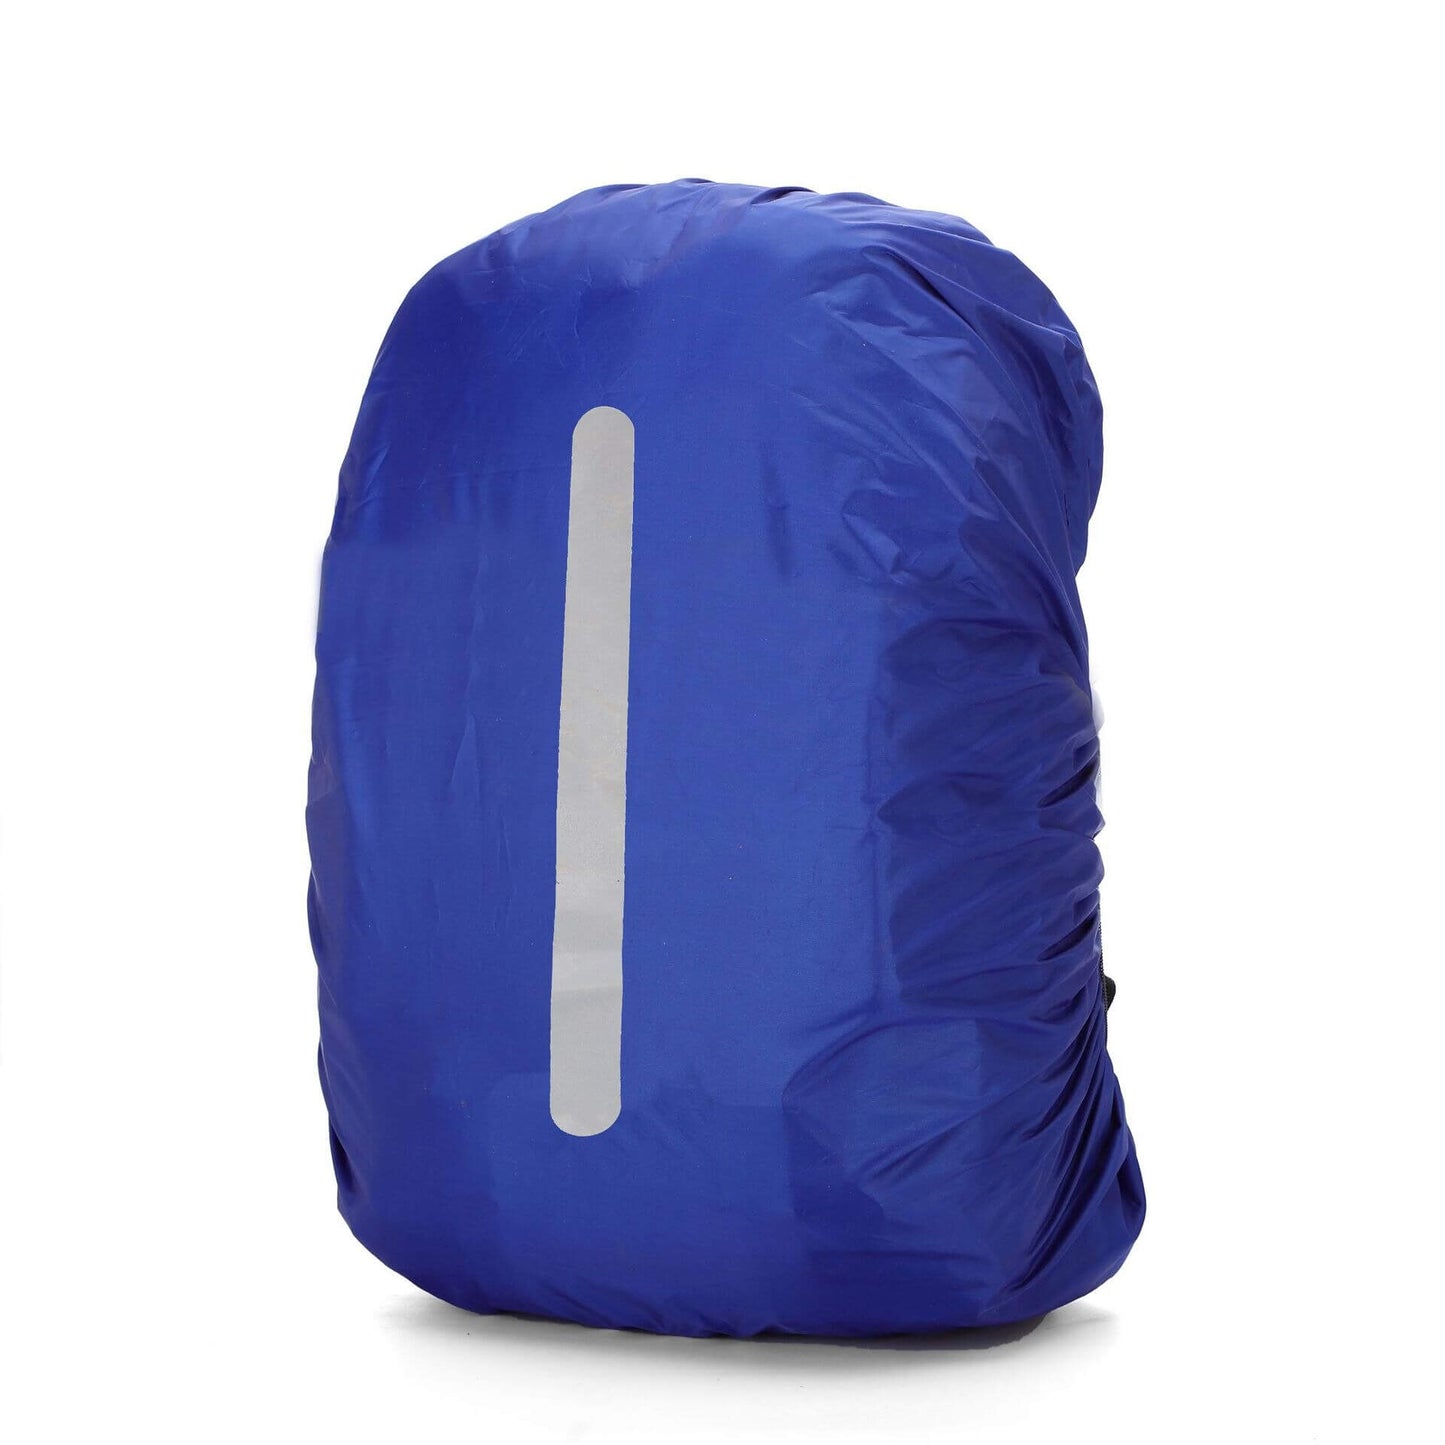 Reflective Waterproof Backpack Rain Cover